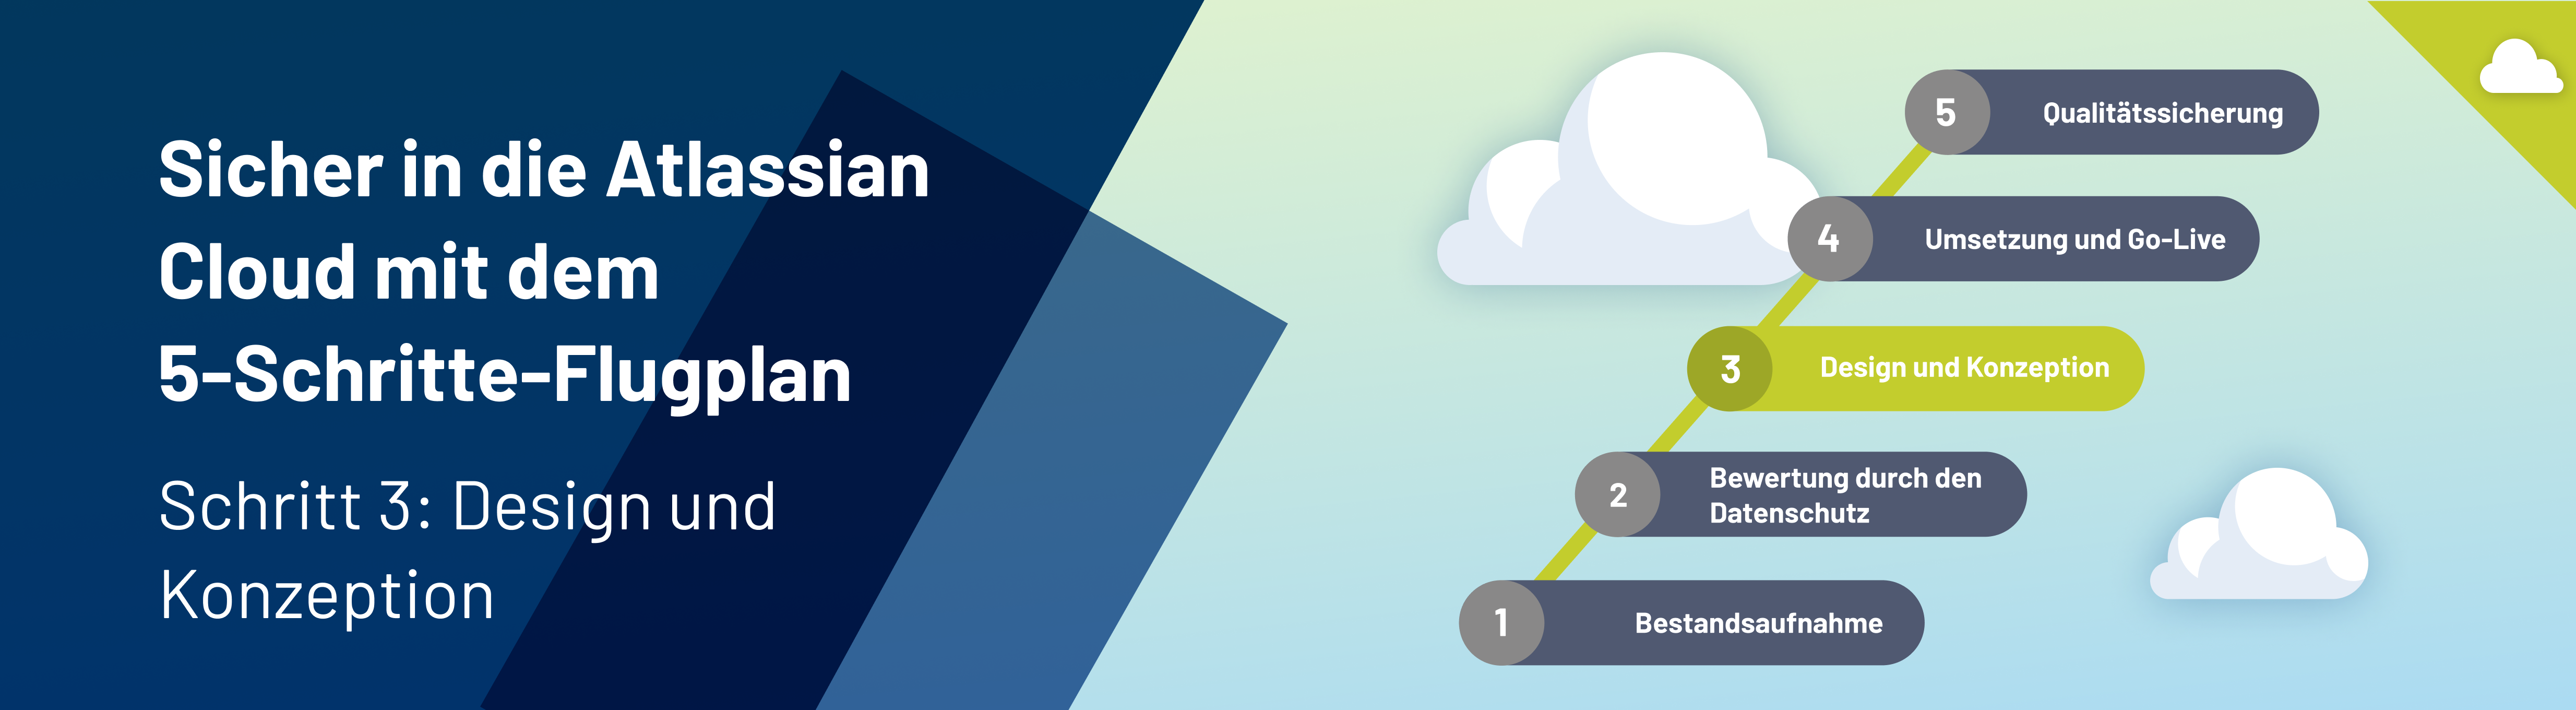 Atlassian Cloud Flugplan Schritt 3: Design und Konzeption - Headerbild